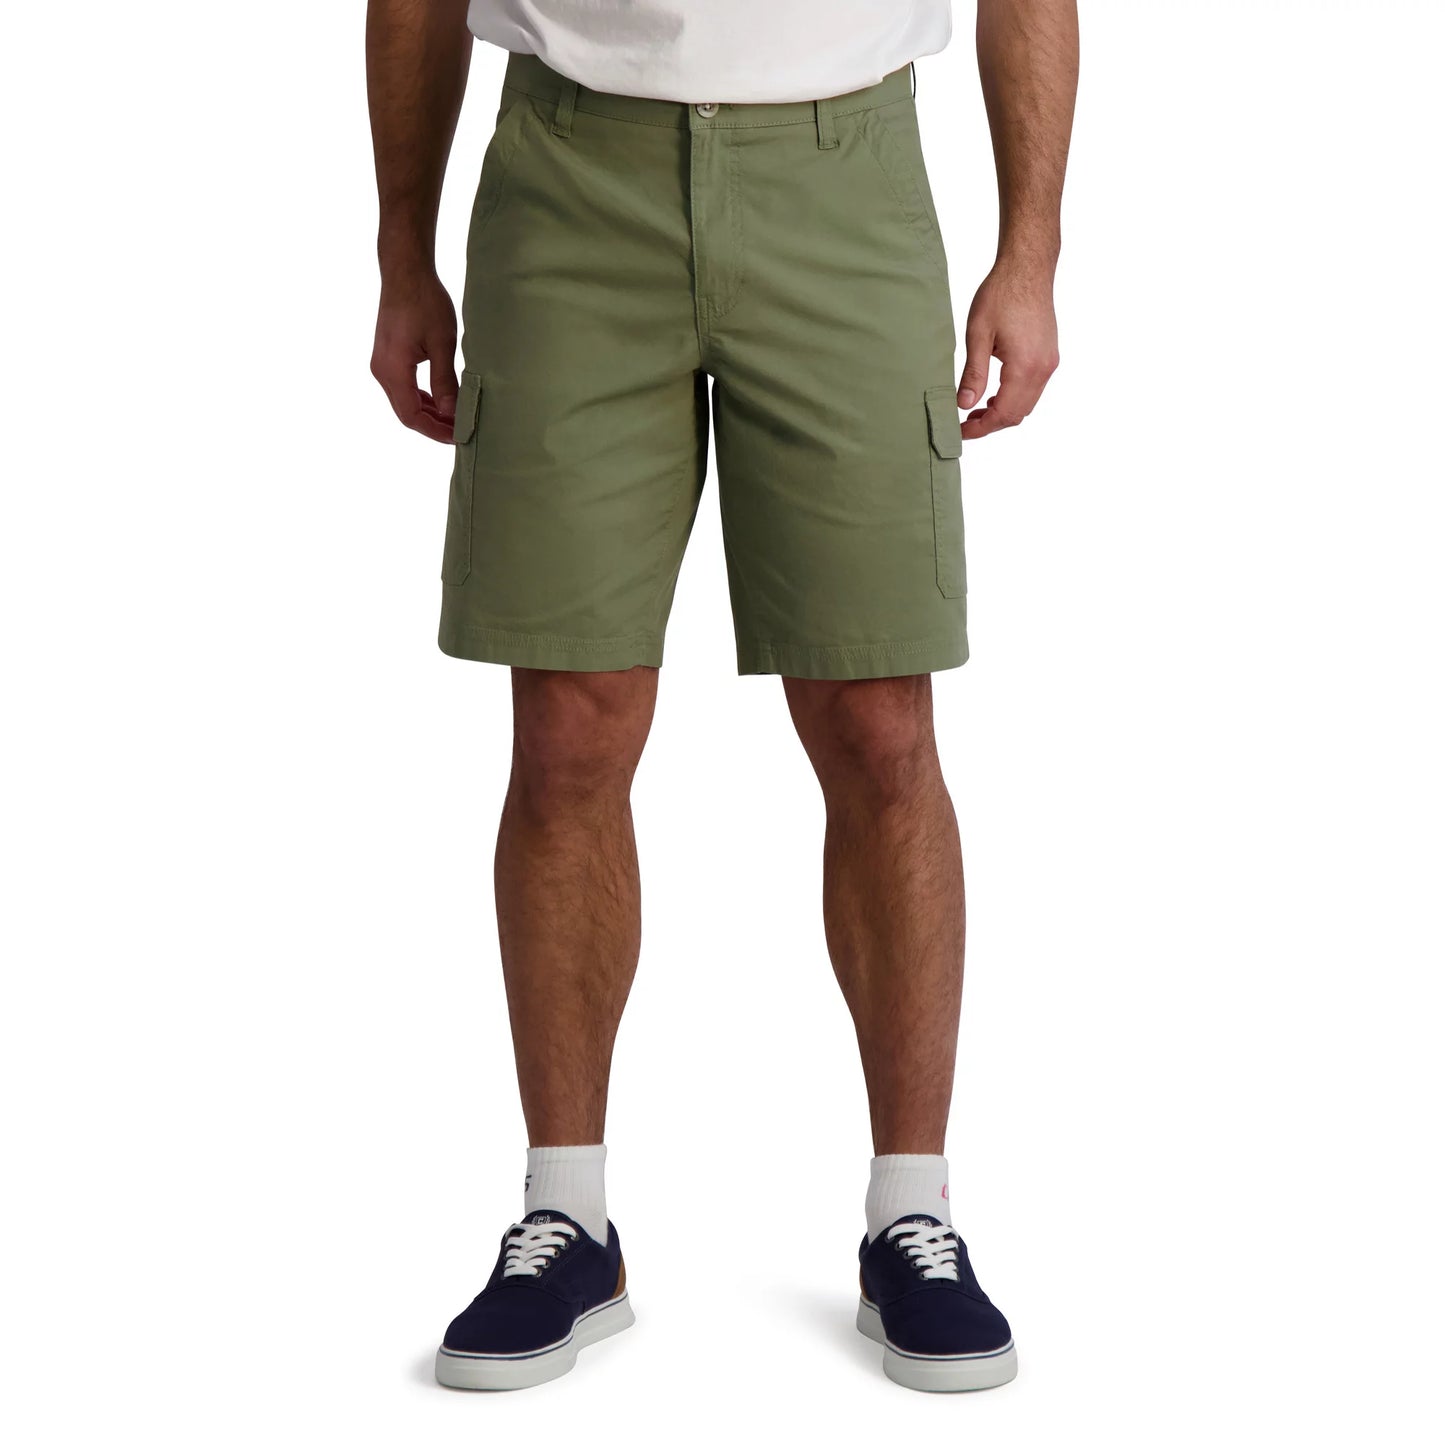 Chaps Men's Cargo Shorts